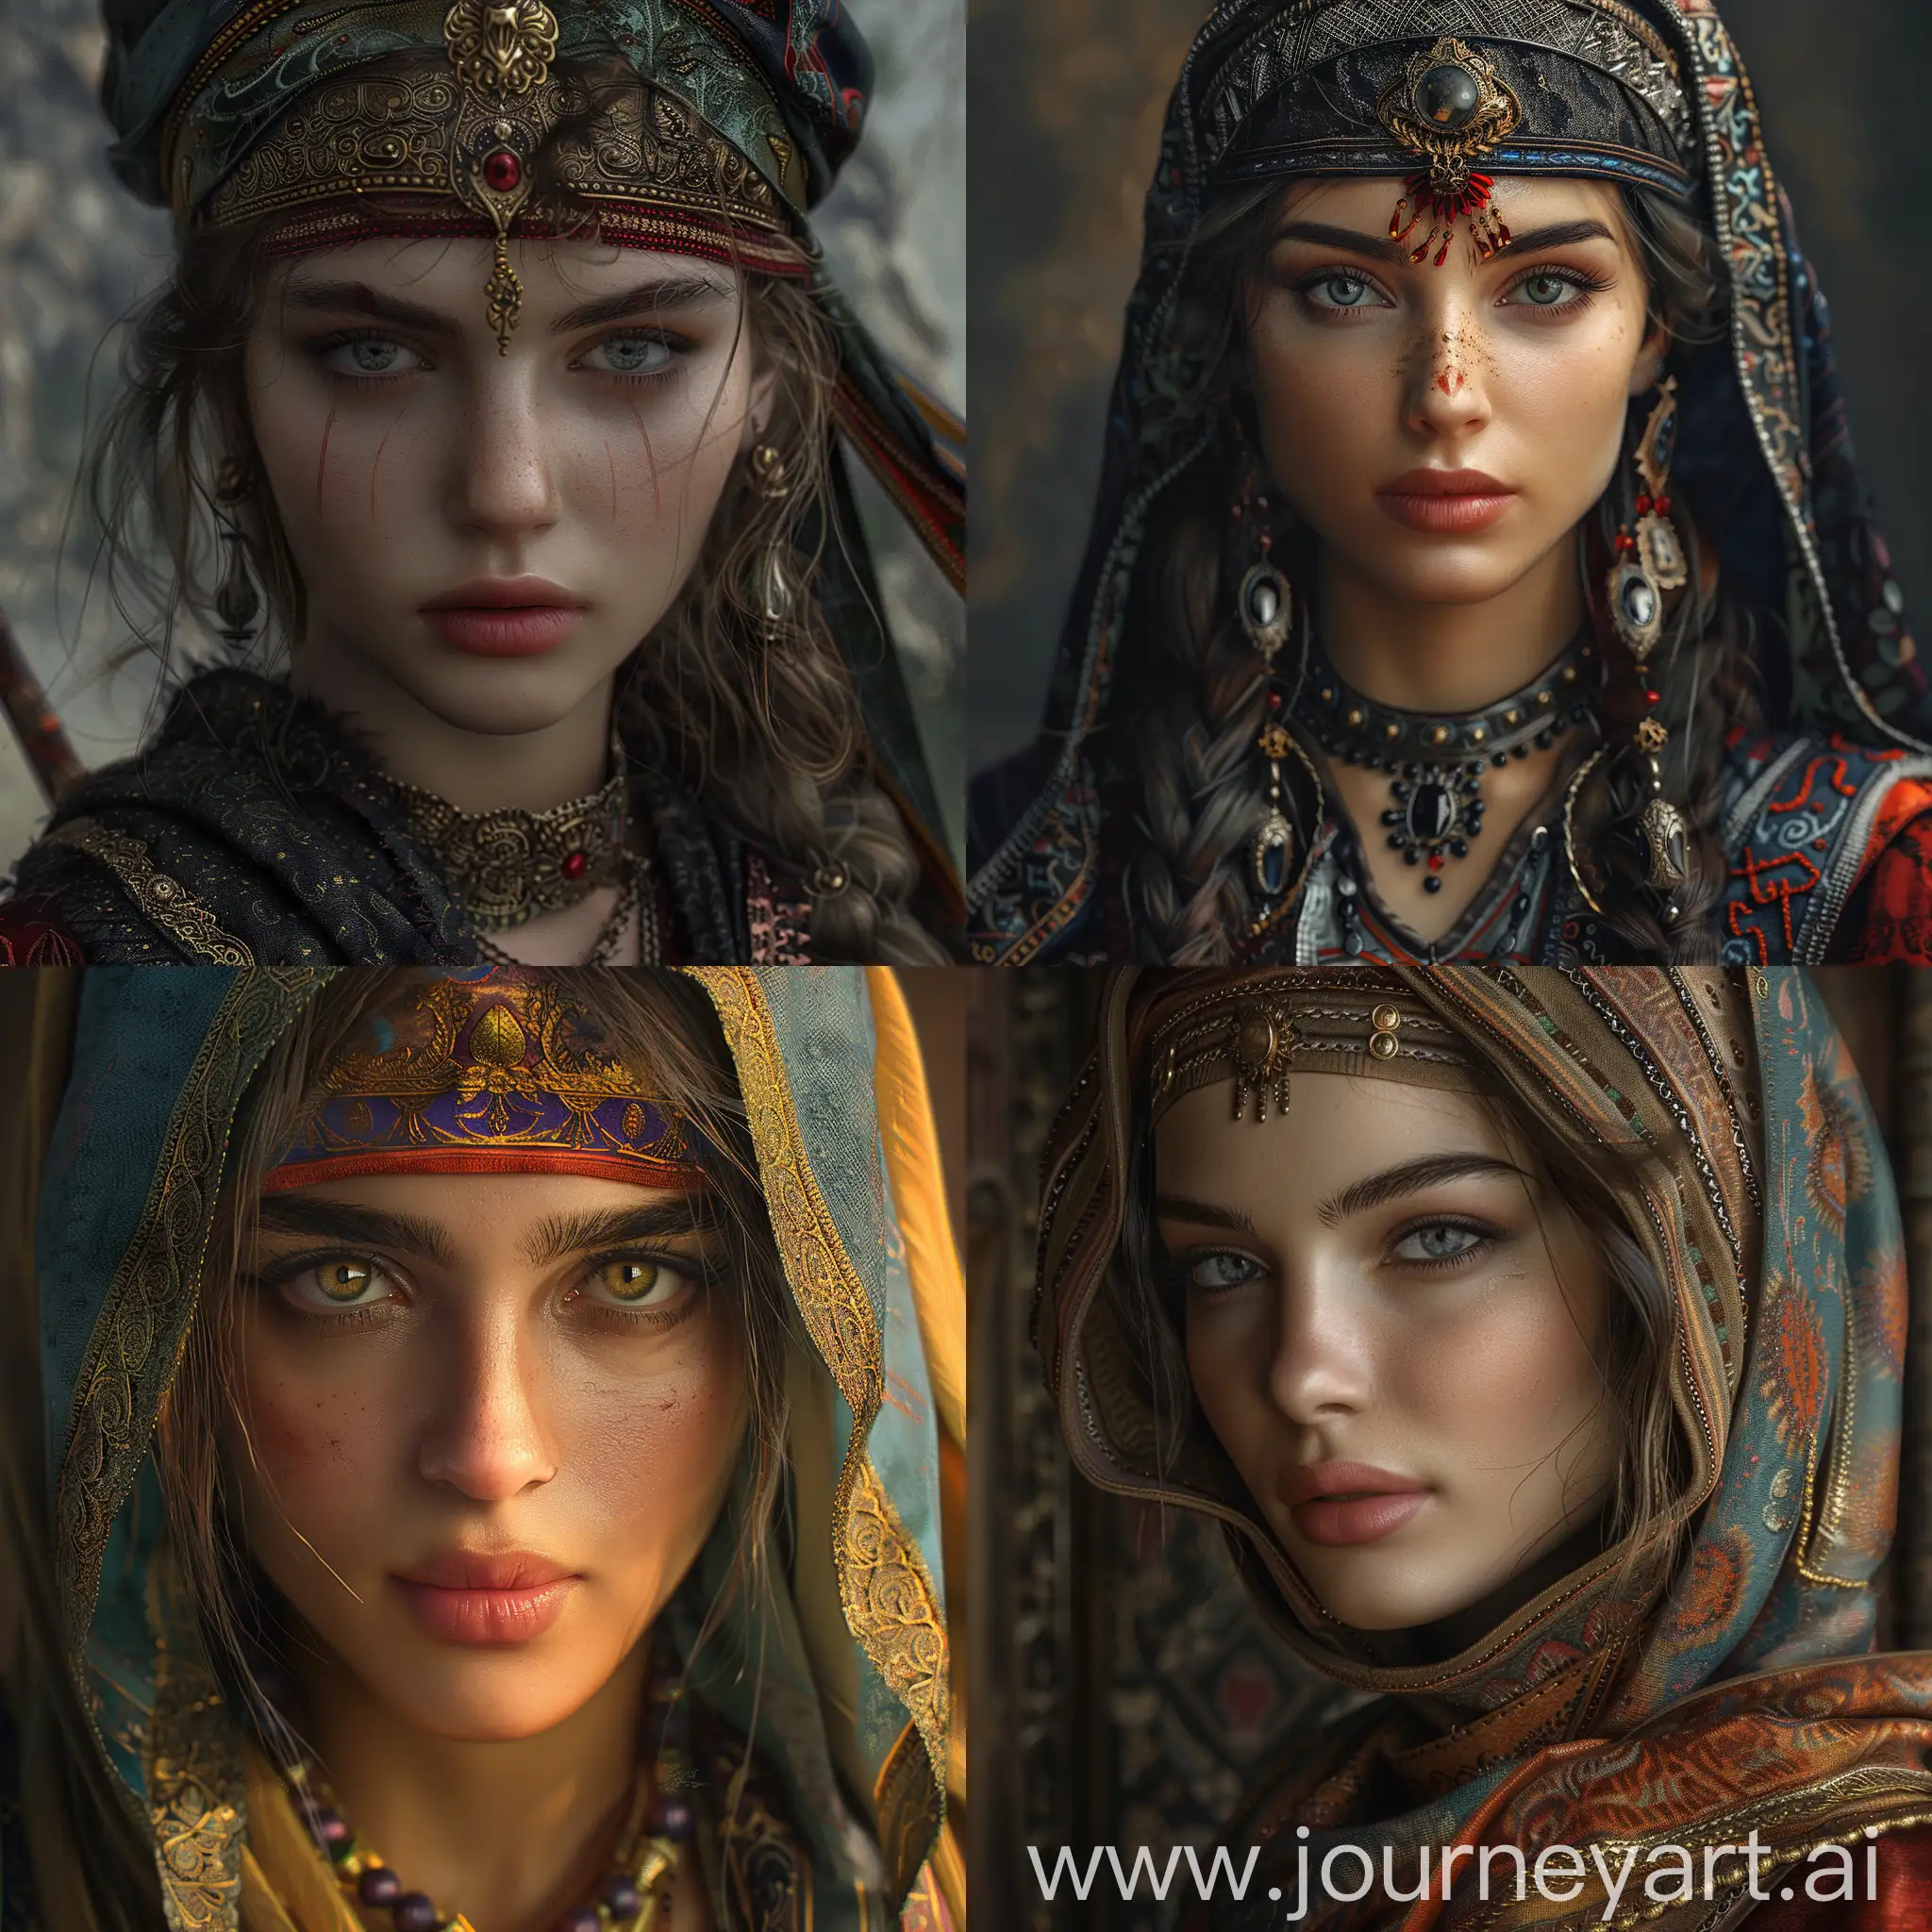 Medieval-Turkish-Ottoman-Warrior-Beauty-Girl-in-Realistic-8K-Portrait